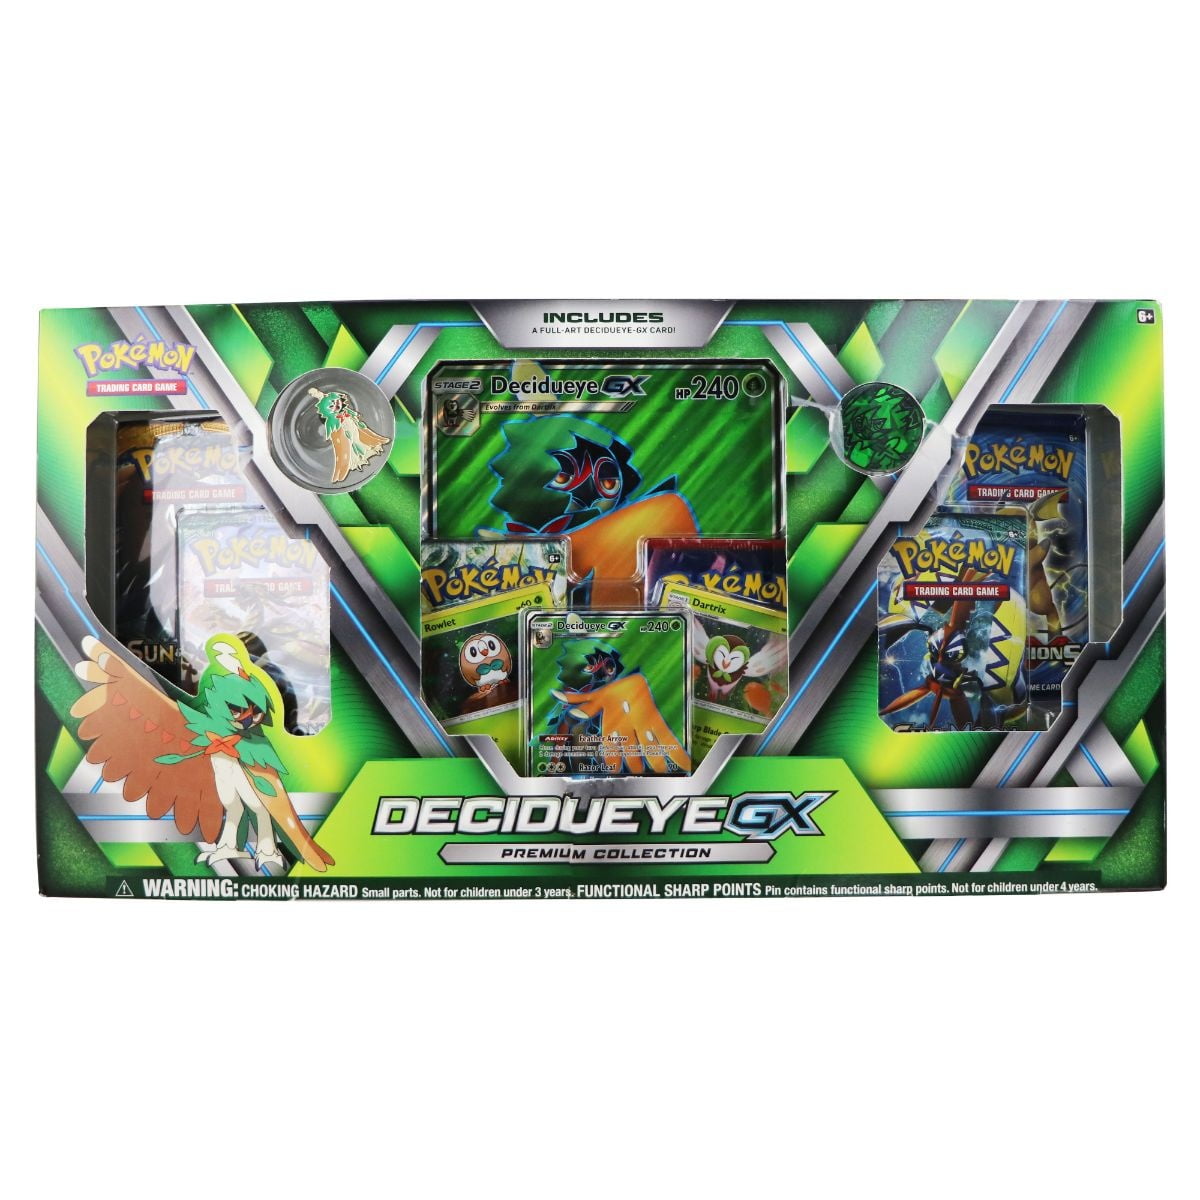 Pokemon Trading Card Game Decidueye GX Premium Box Collection (Refurbished) - Walmart.com ...